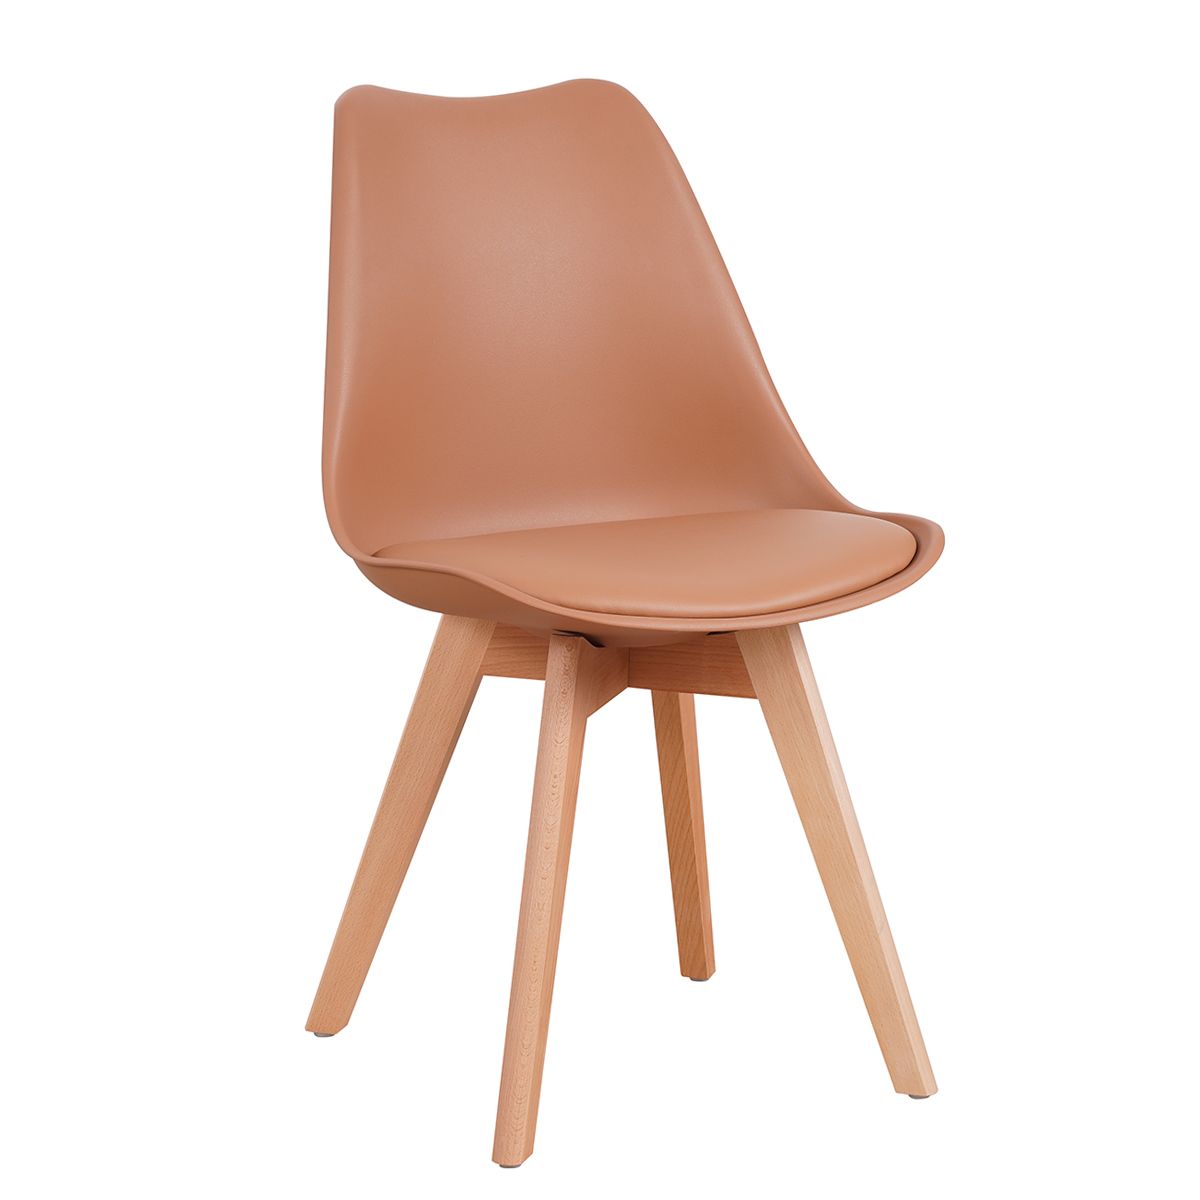 Artelibre Καρέκλα ArteLibre GROUGH Cappuccino PP/PU/Ξύλο 49x56x83cm